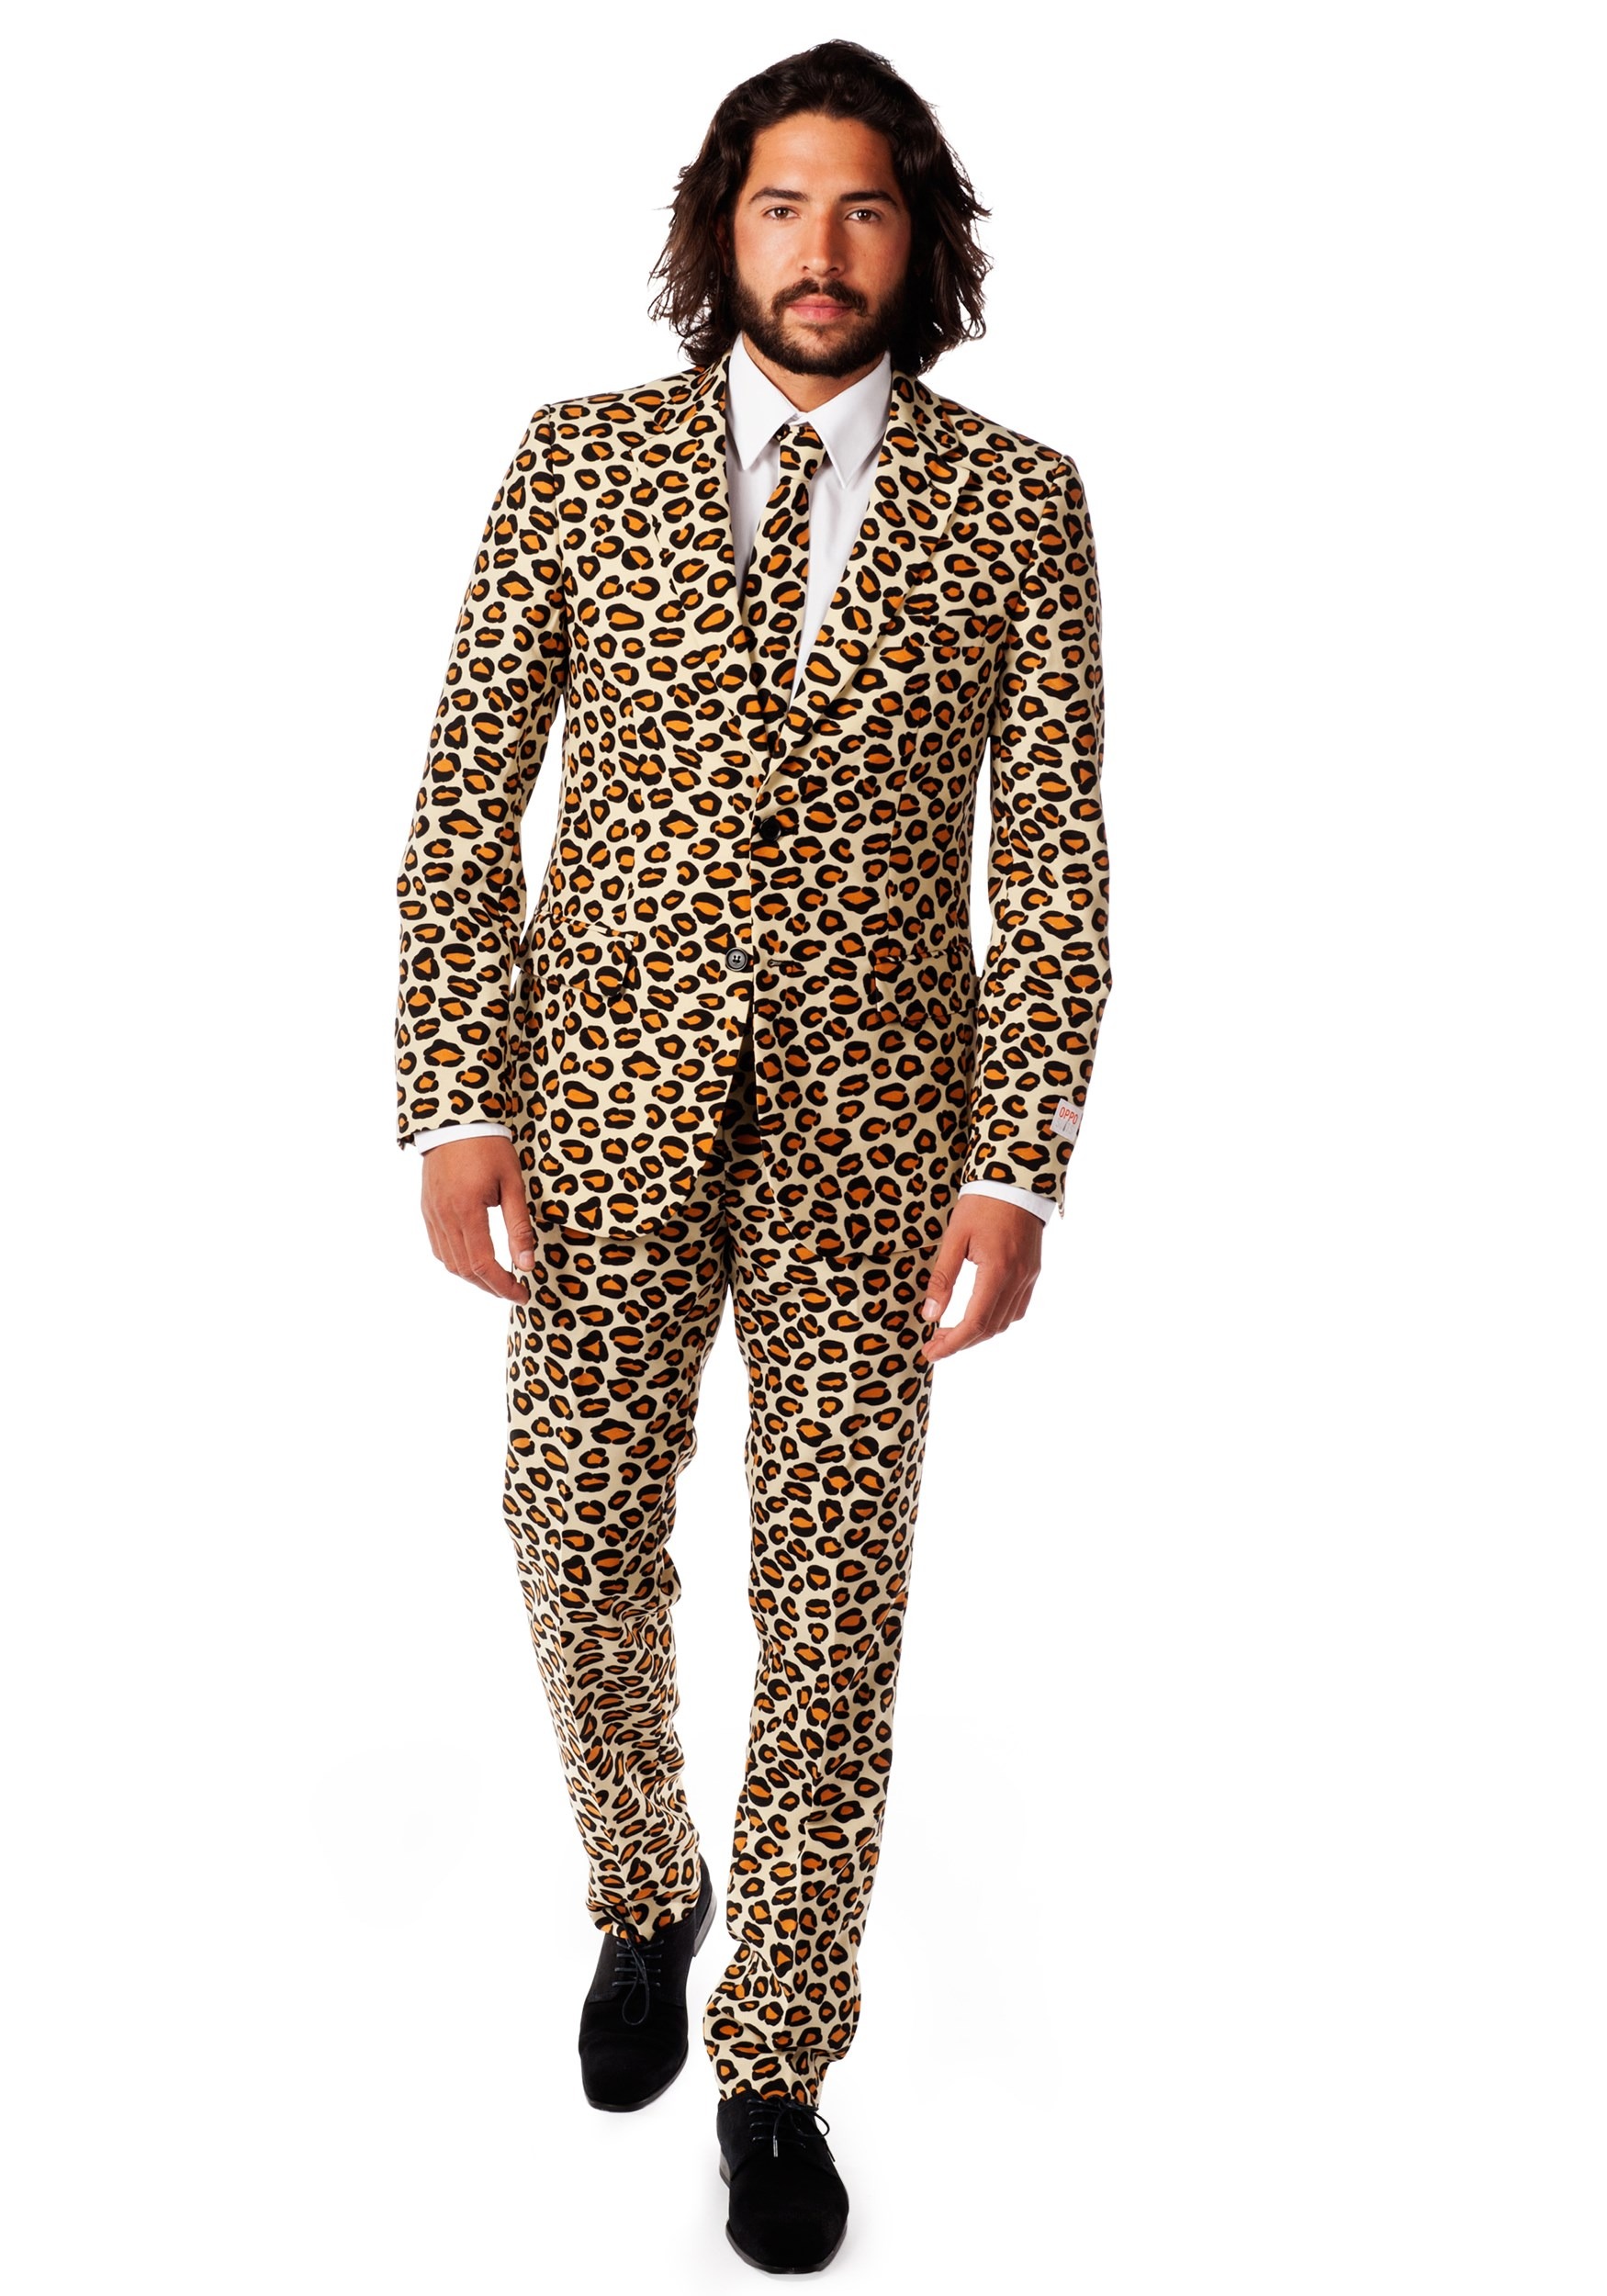 Mens Jaguar Print Suit OppoSuits Costume